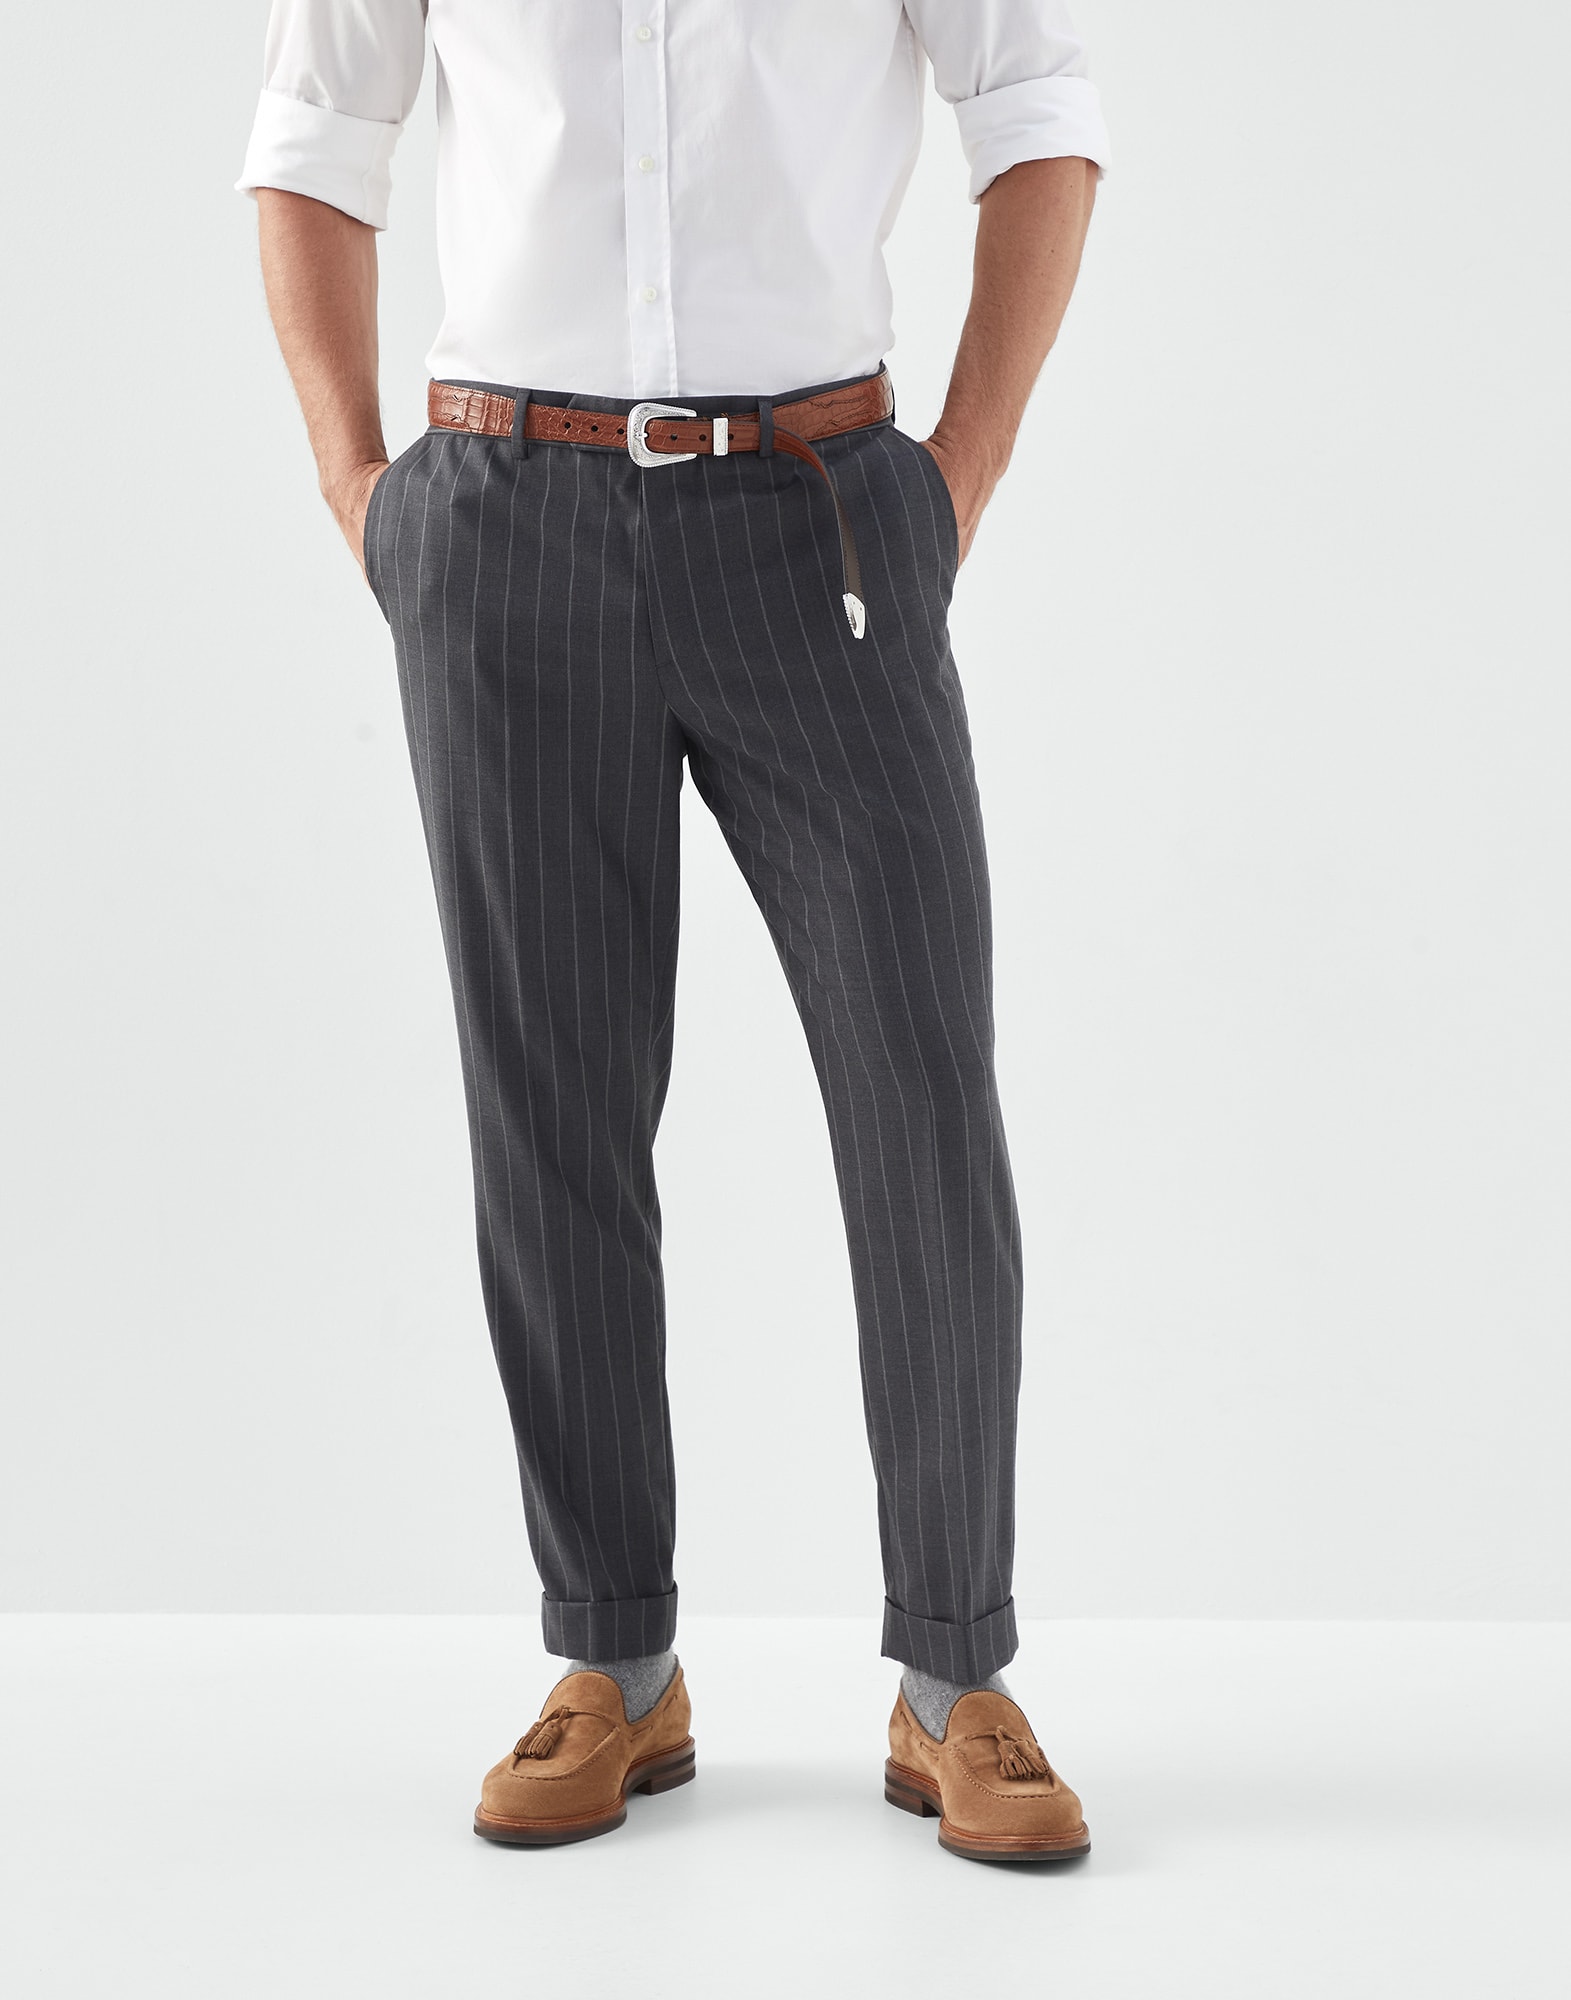 Buy ARROW Autoflex Patterned Striped Trouser [Grey, 42] Online - Best Price  ARROW Autoflex Patterned Striped Trouser [Grey, 42] - Justdial Shop Online.